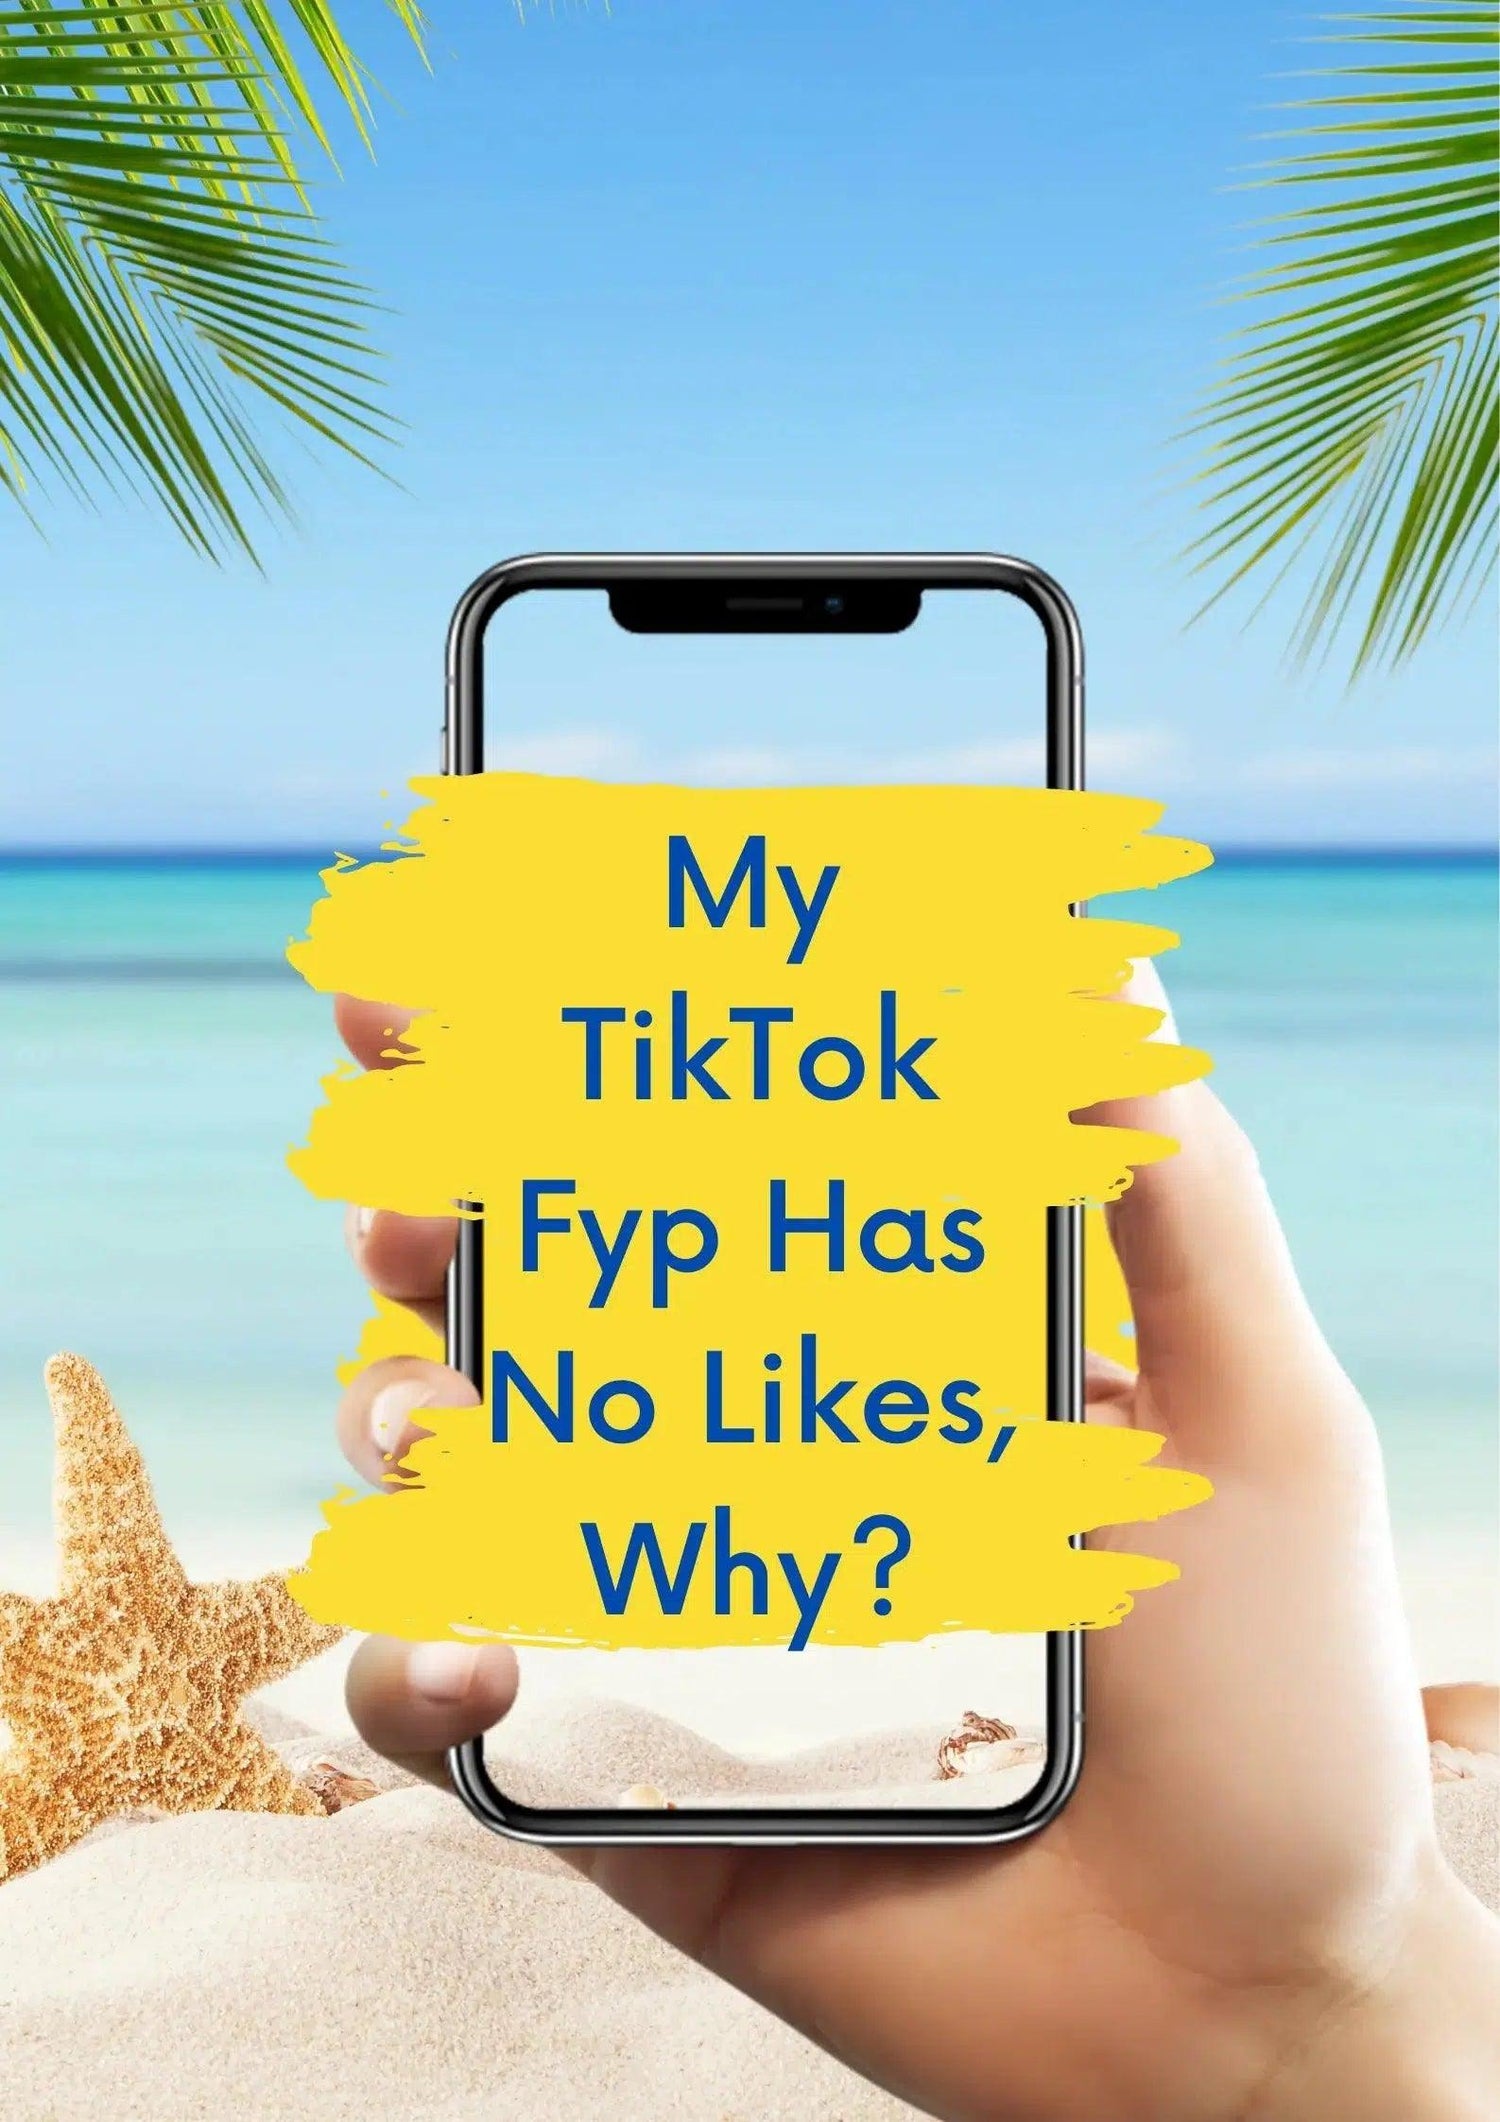 My TikTok Fyp Has No Likes, Why?